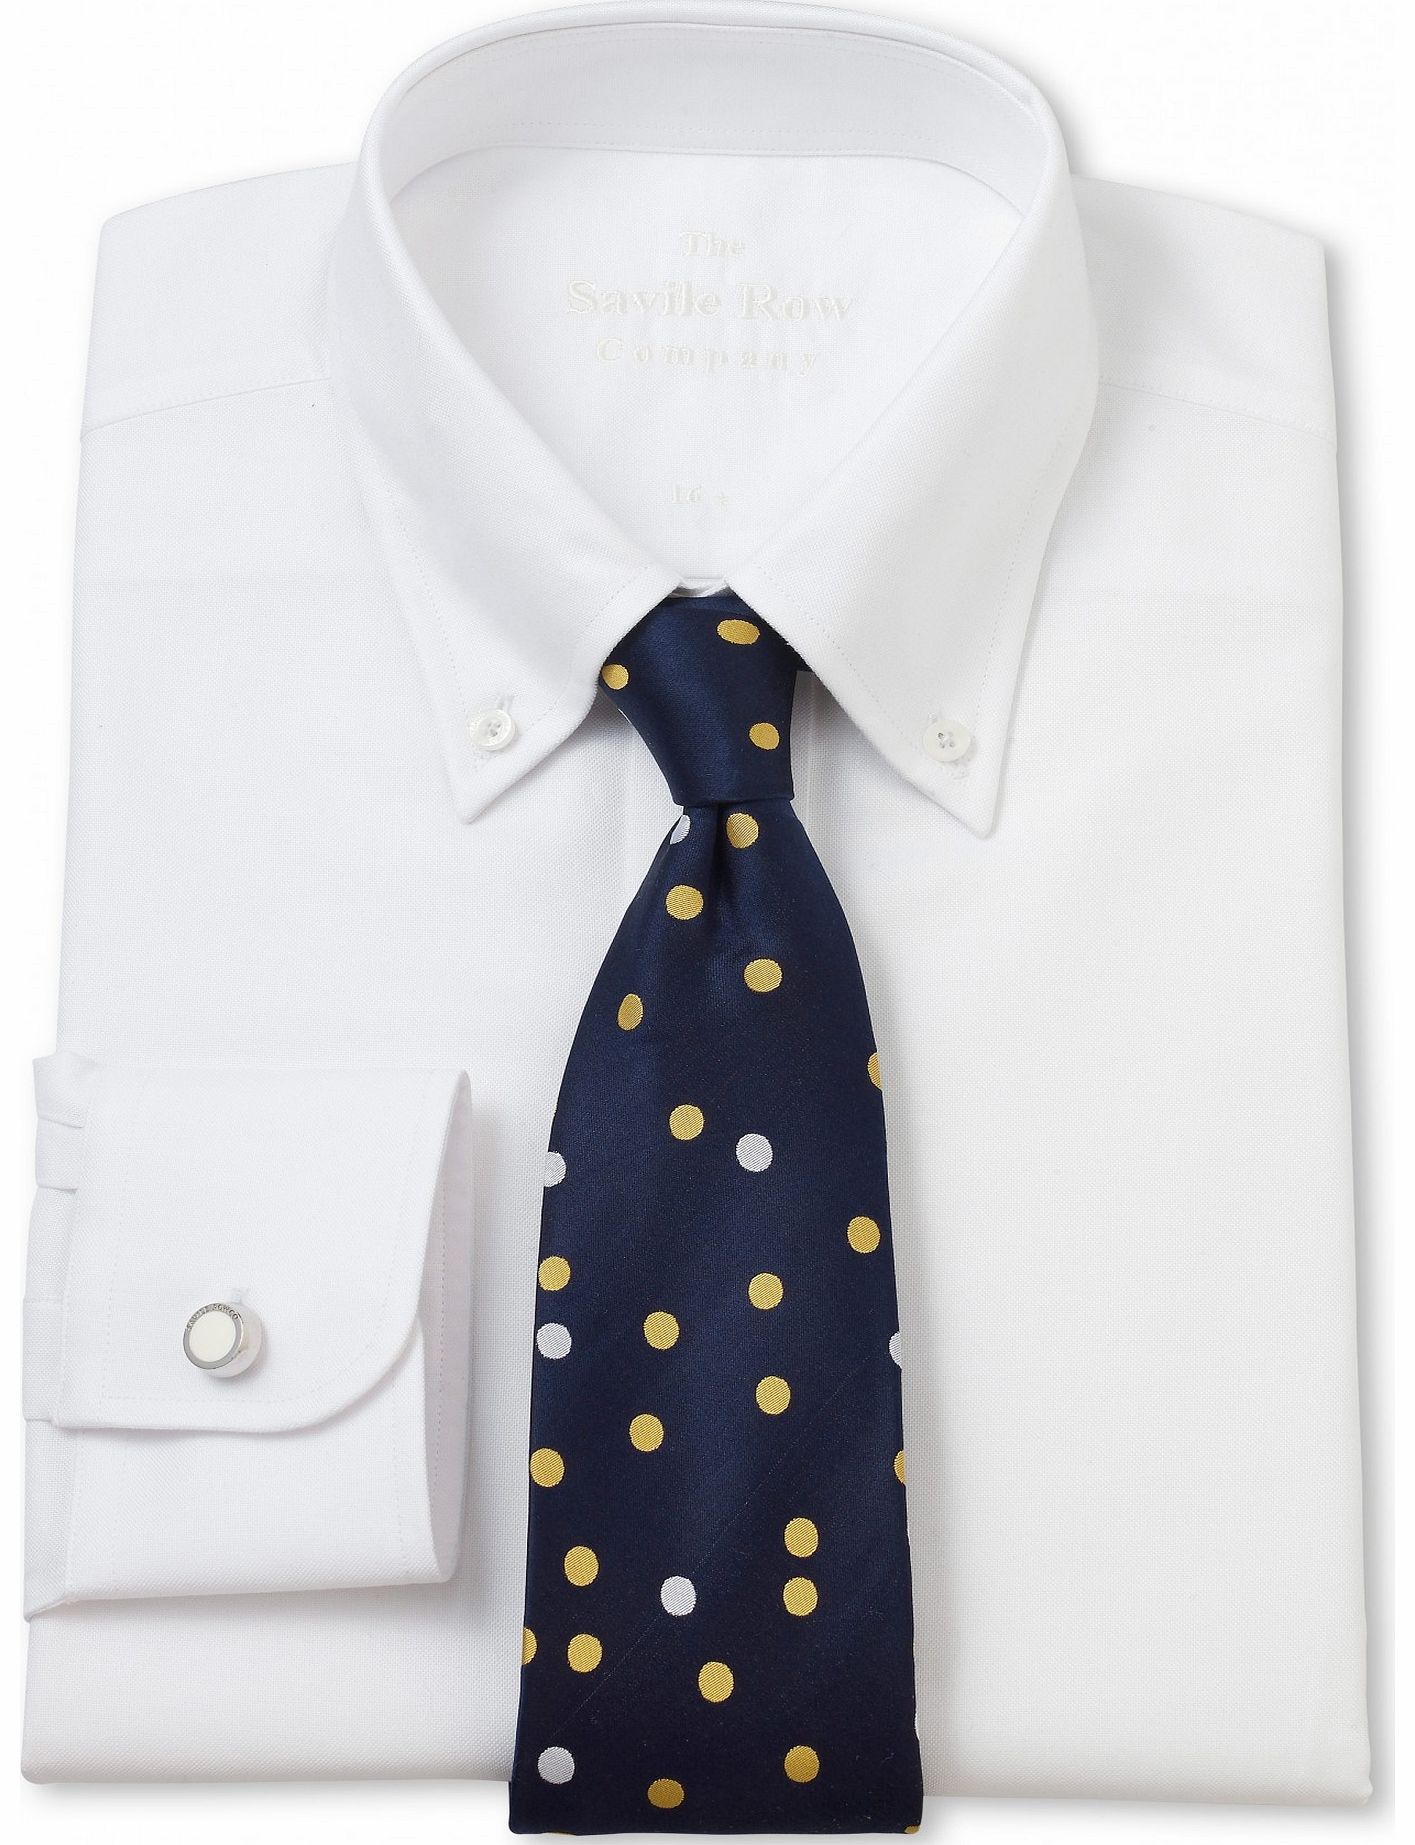 Savile Row Company White Oxford Button Down Slim Fit Shirt 14 1/2``